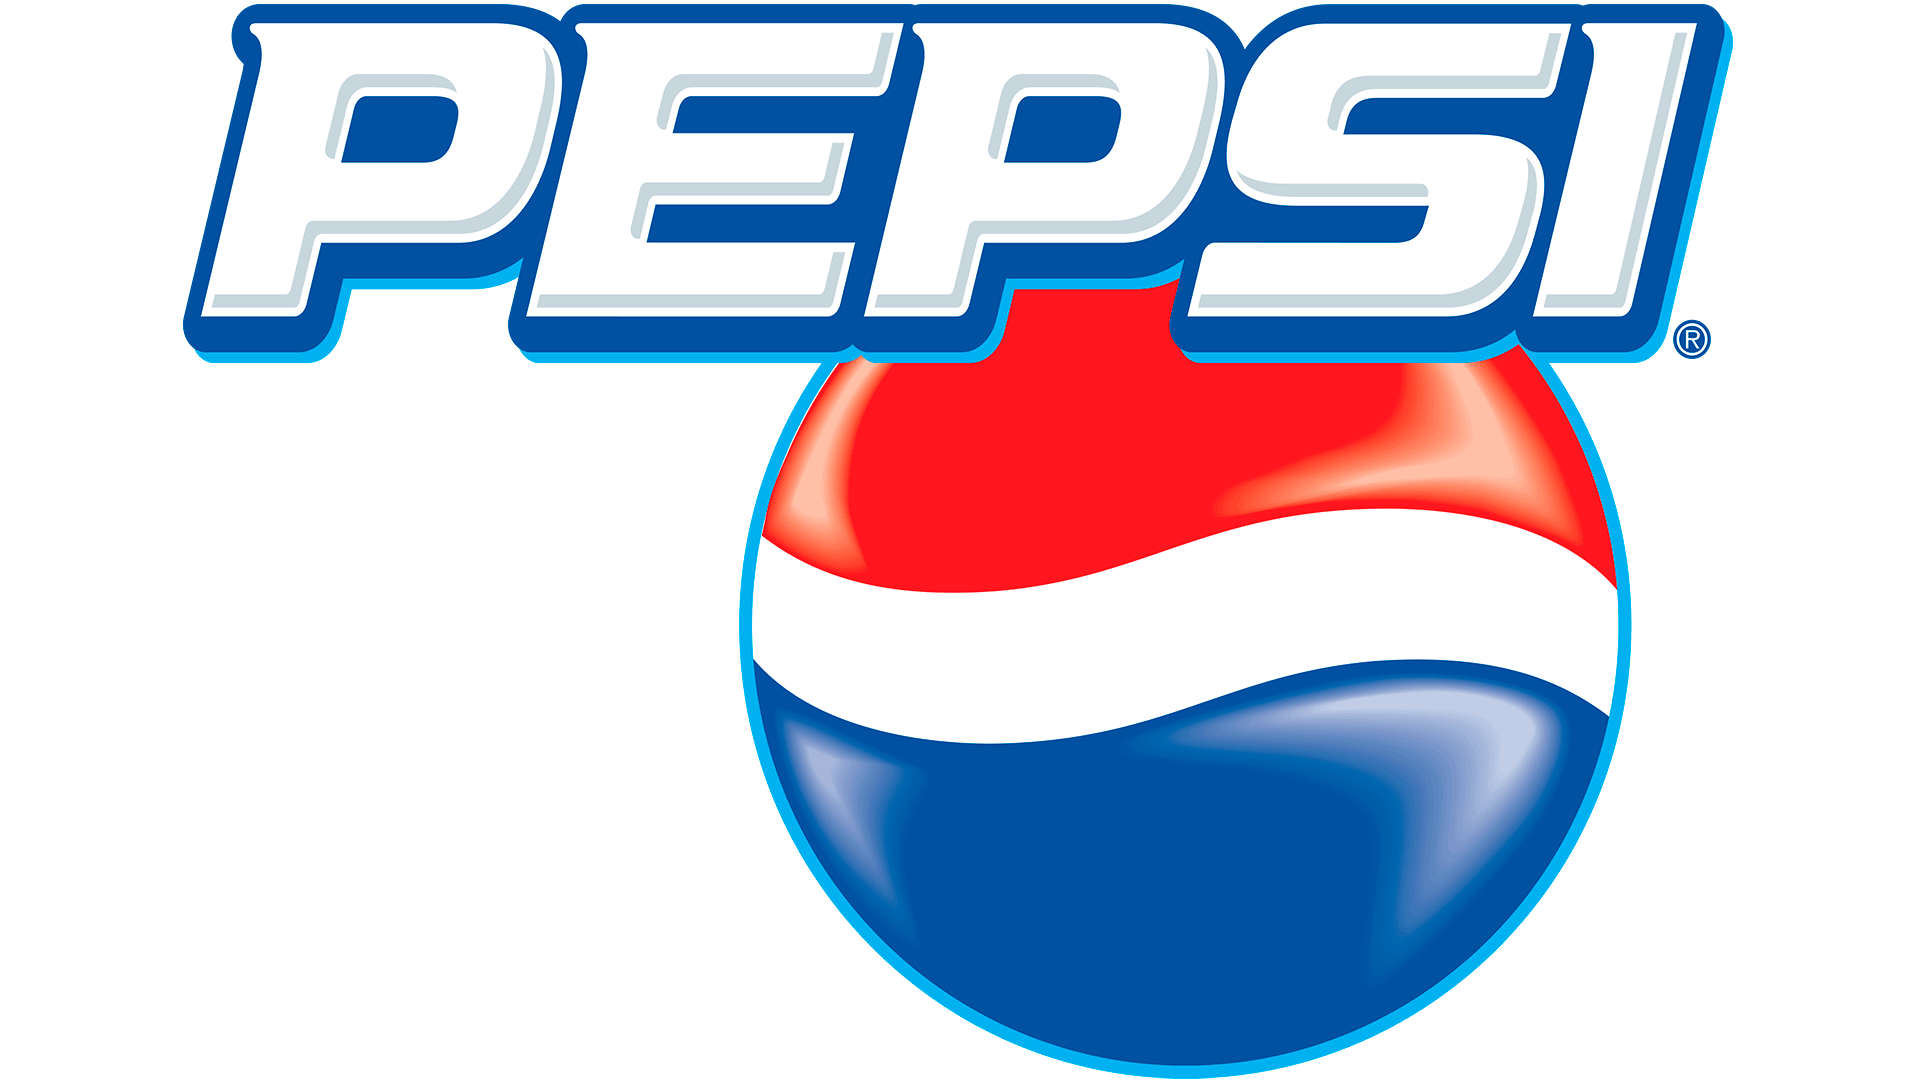 Pepsi Logo Png Free Pepsi Logopng Transparent Images 2828 Pngio Images